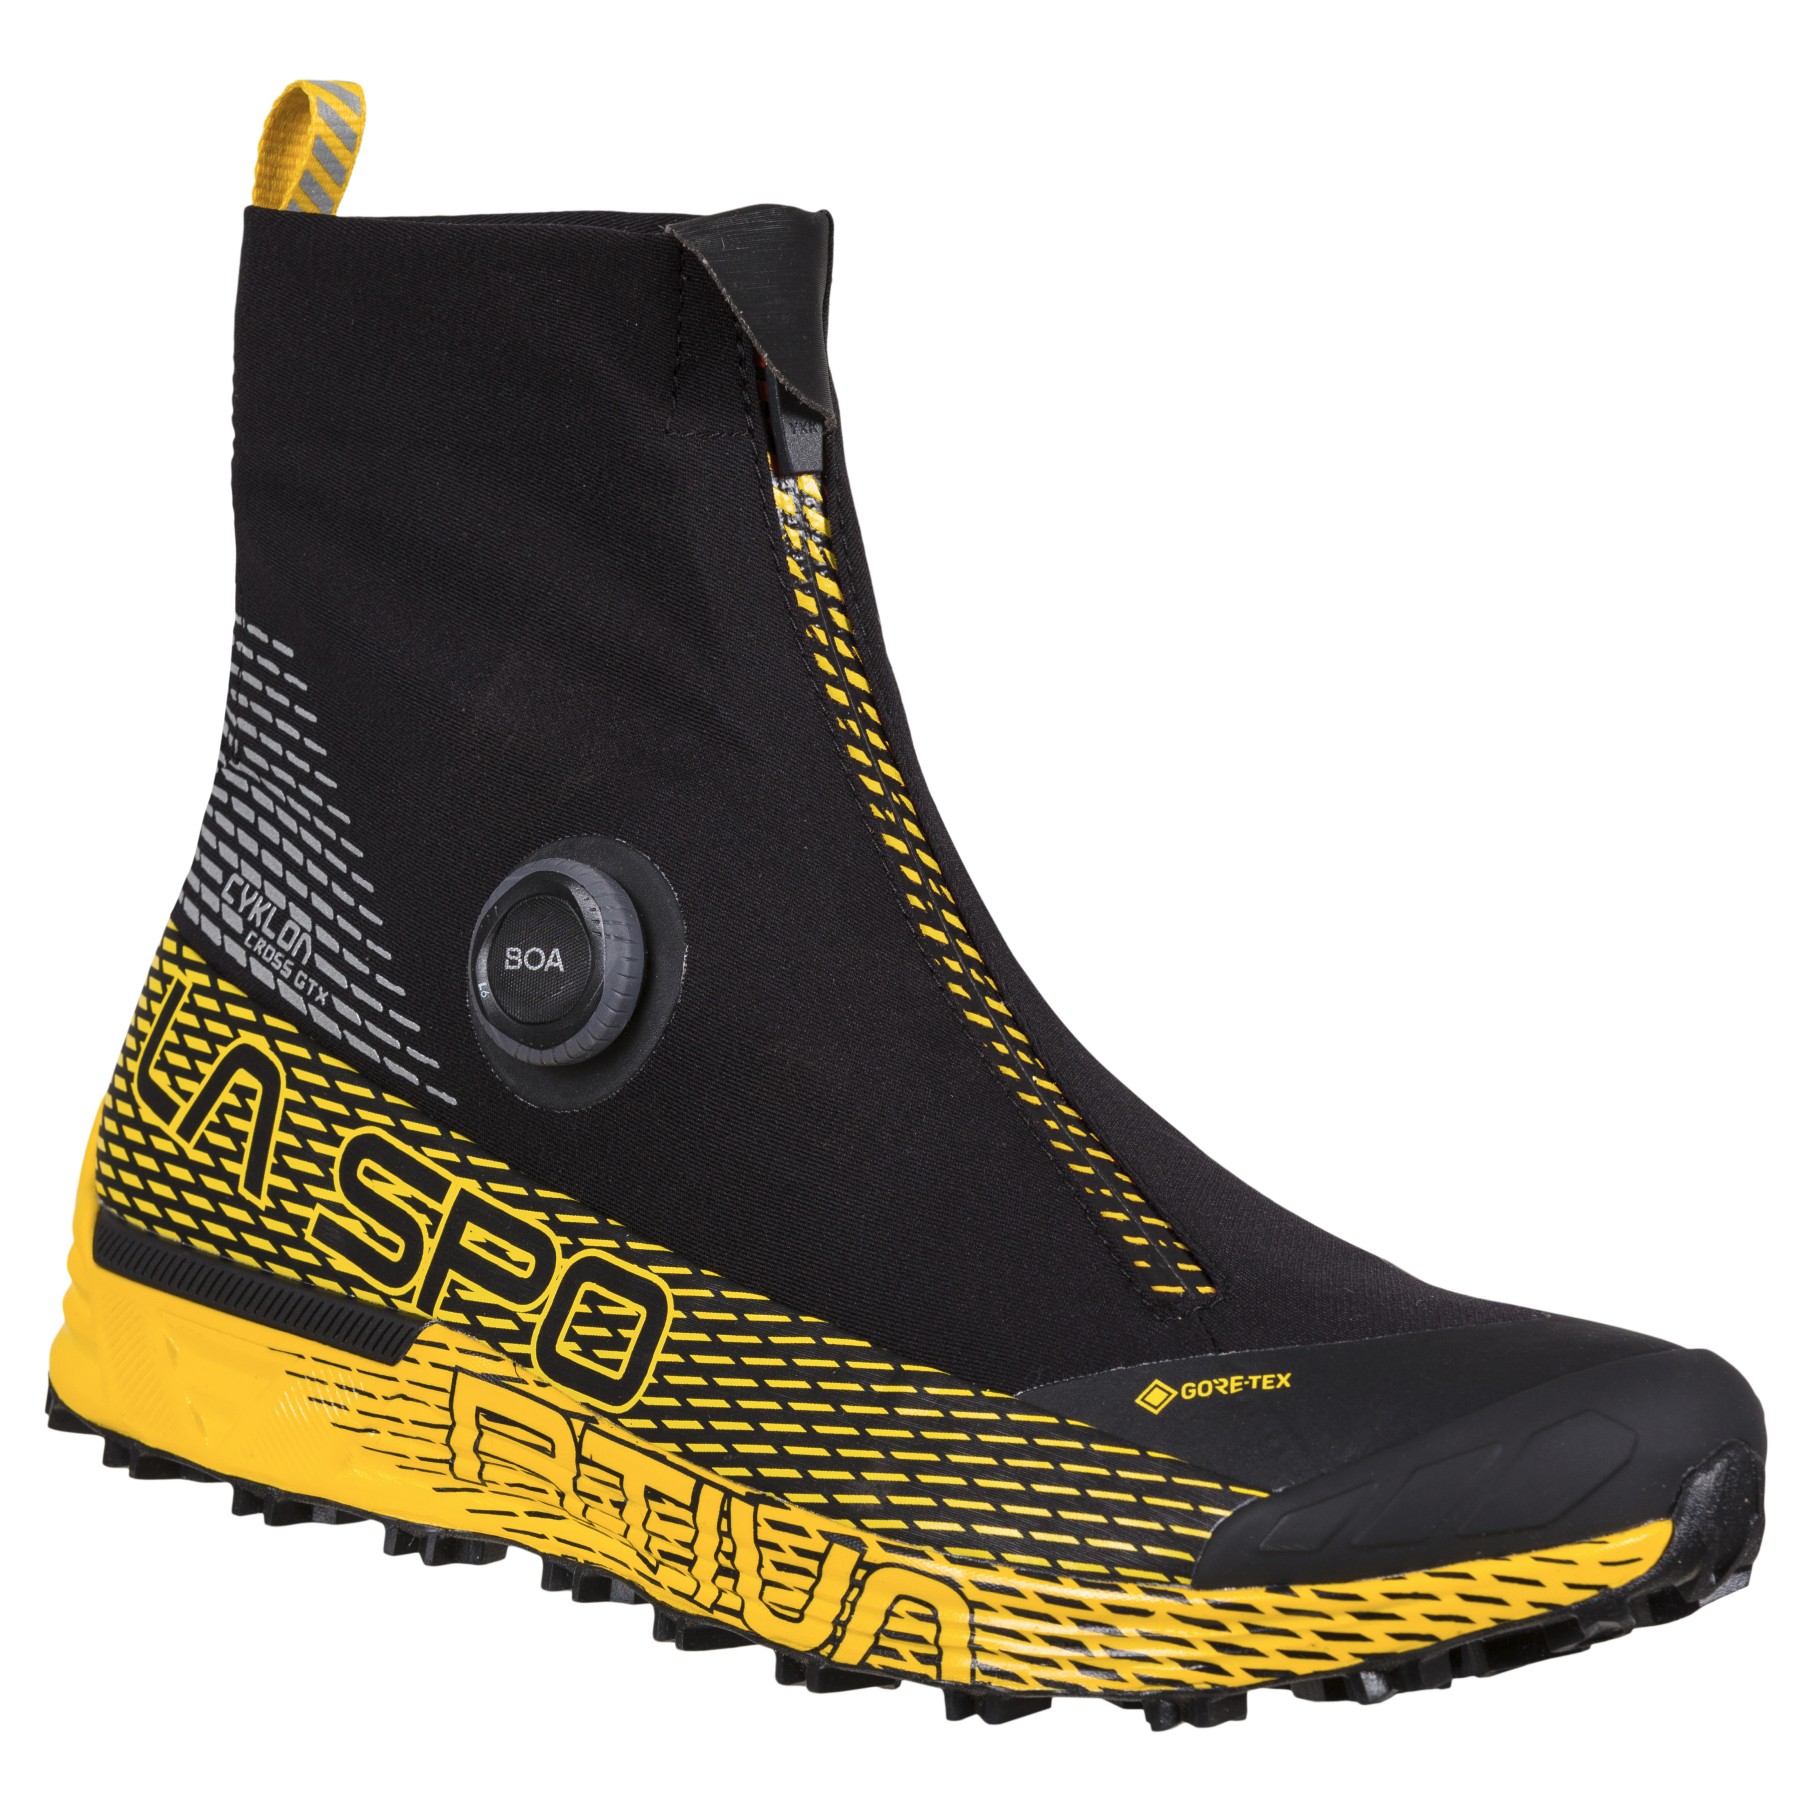 Picture of La Sportiva Cyklon Cross GTX Running Shoes - Black/Yellow